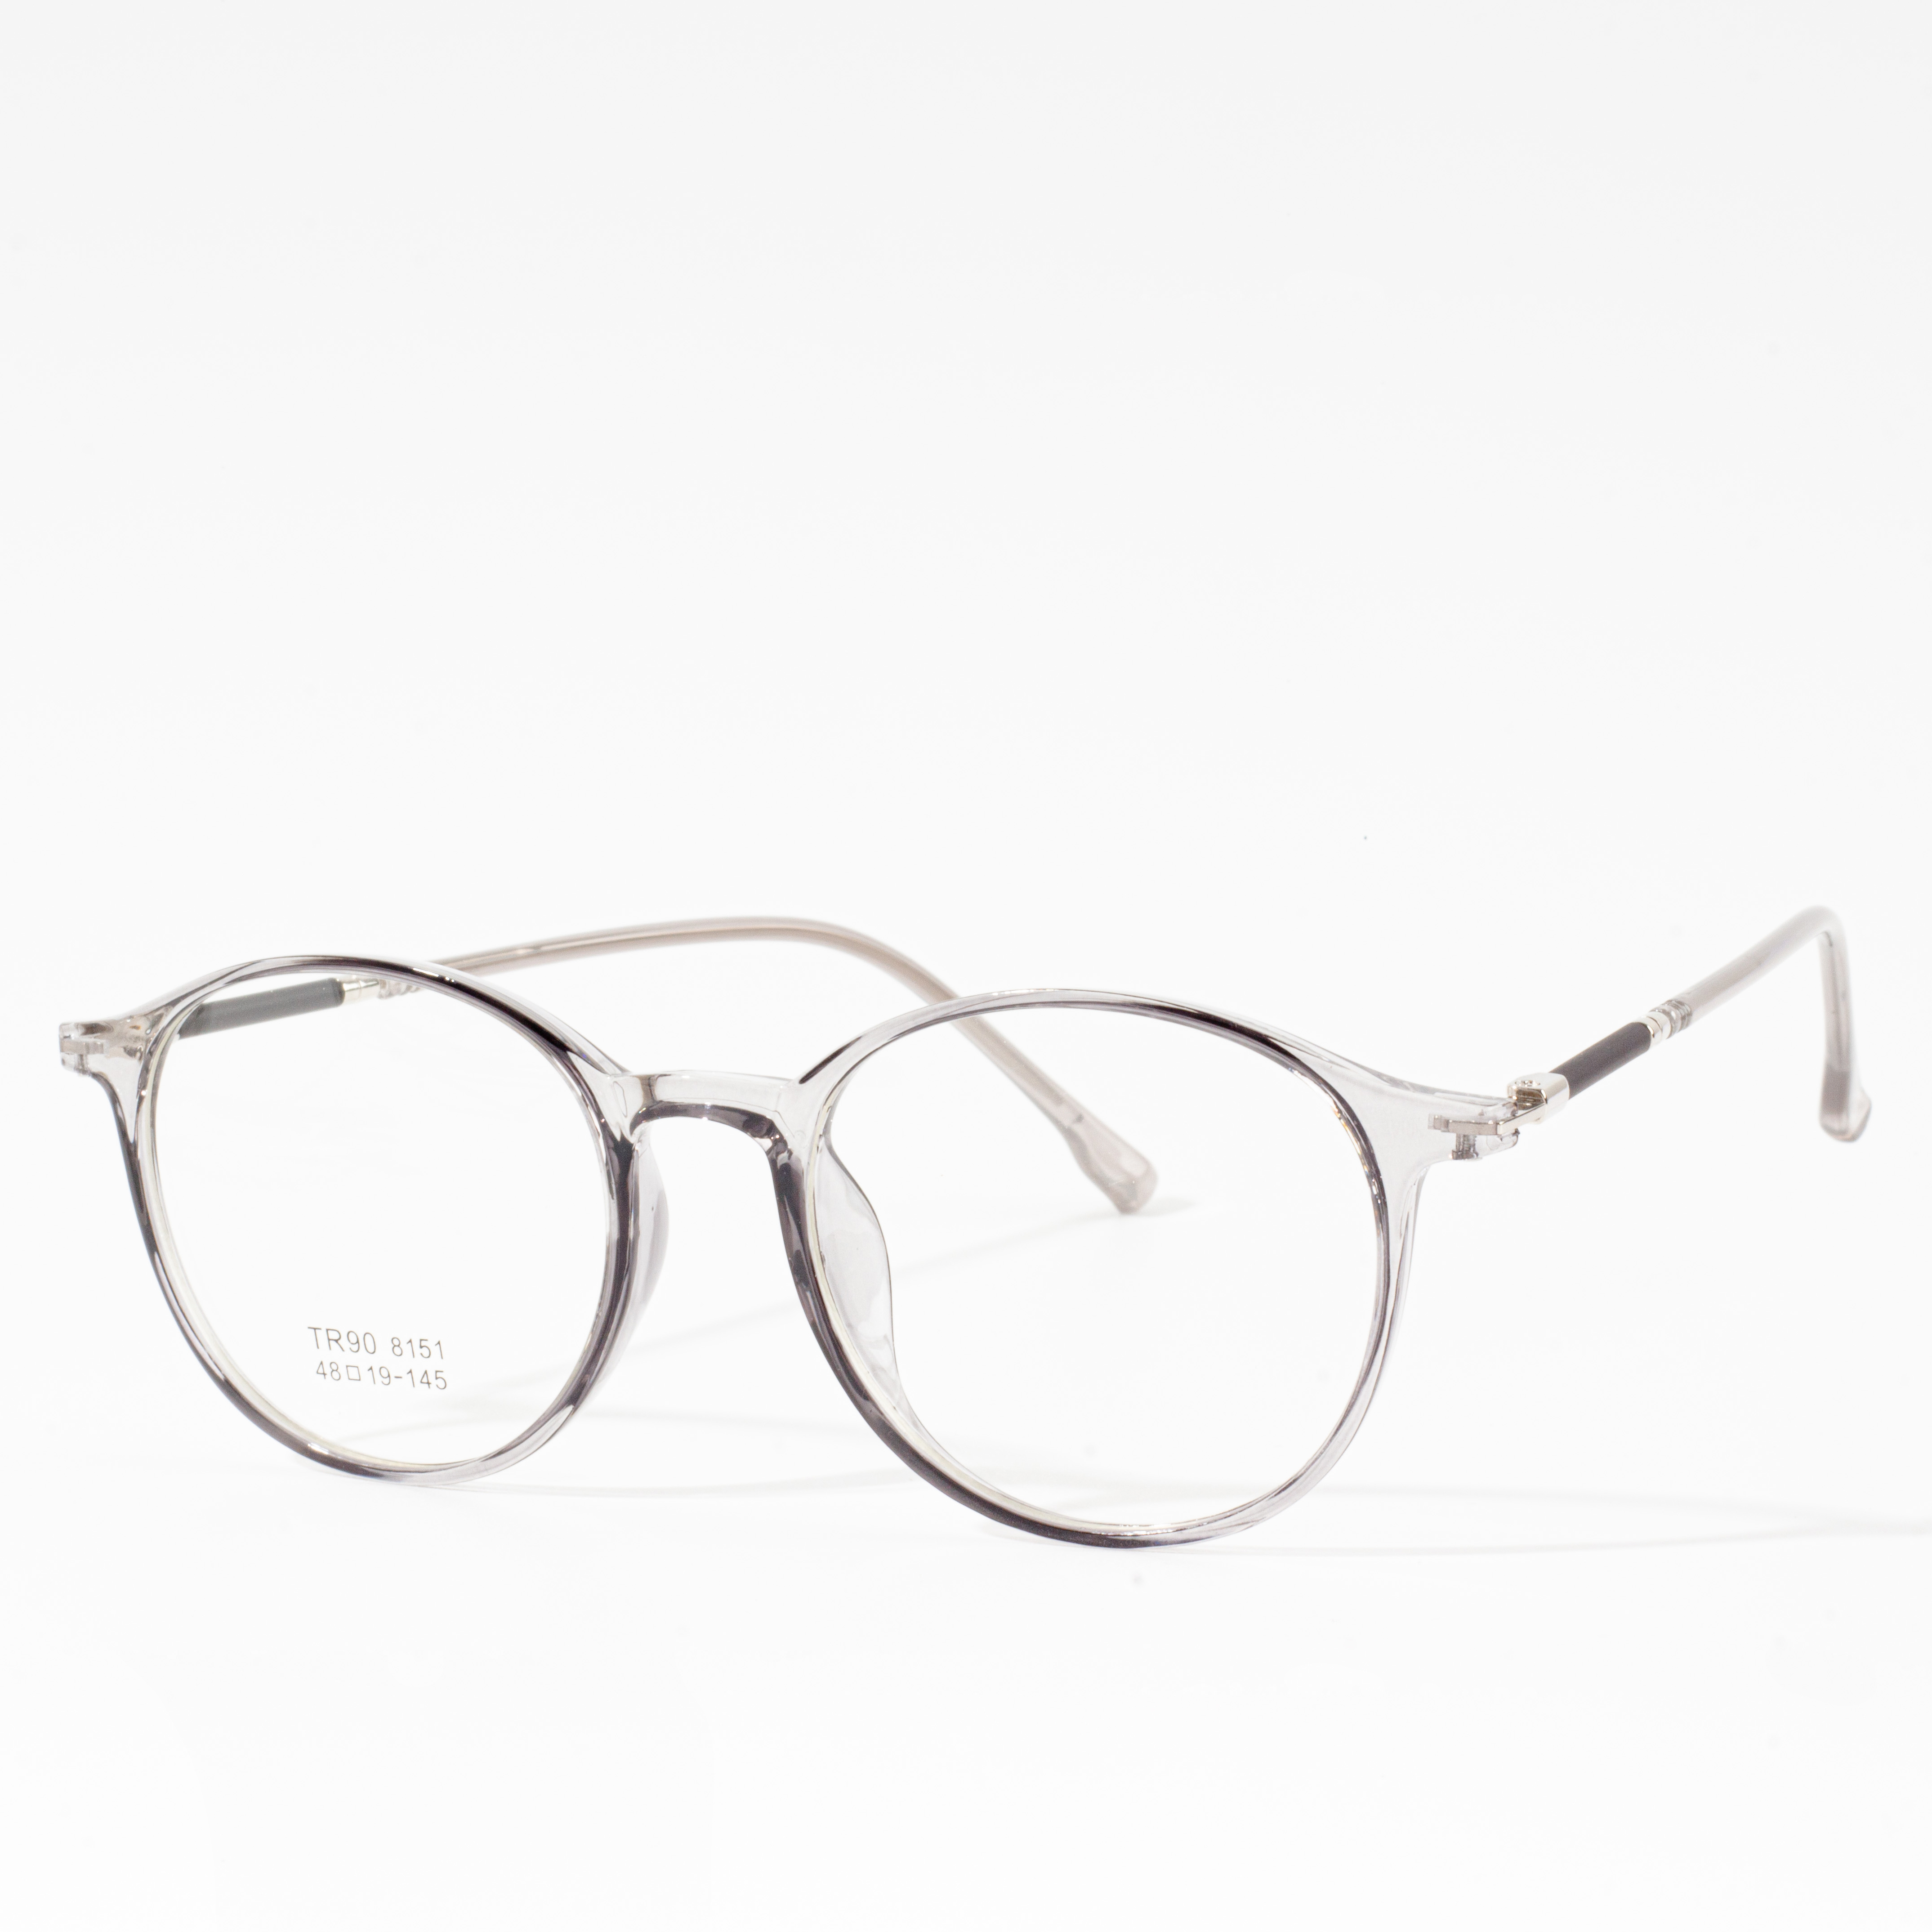 kampioen brille frames